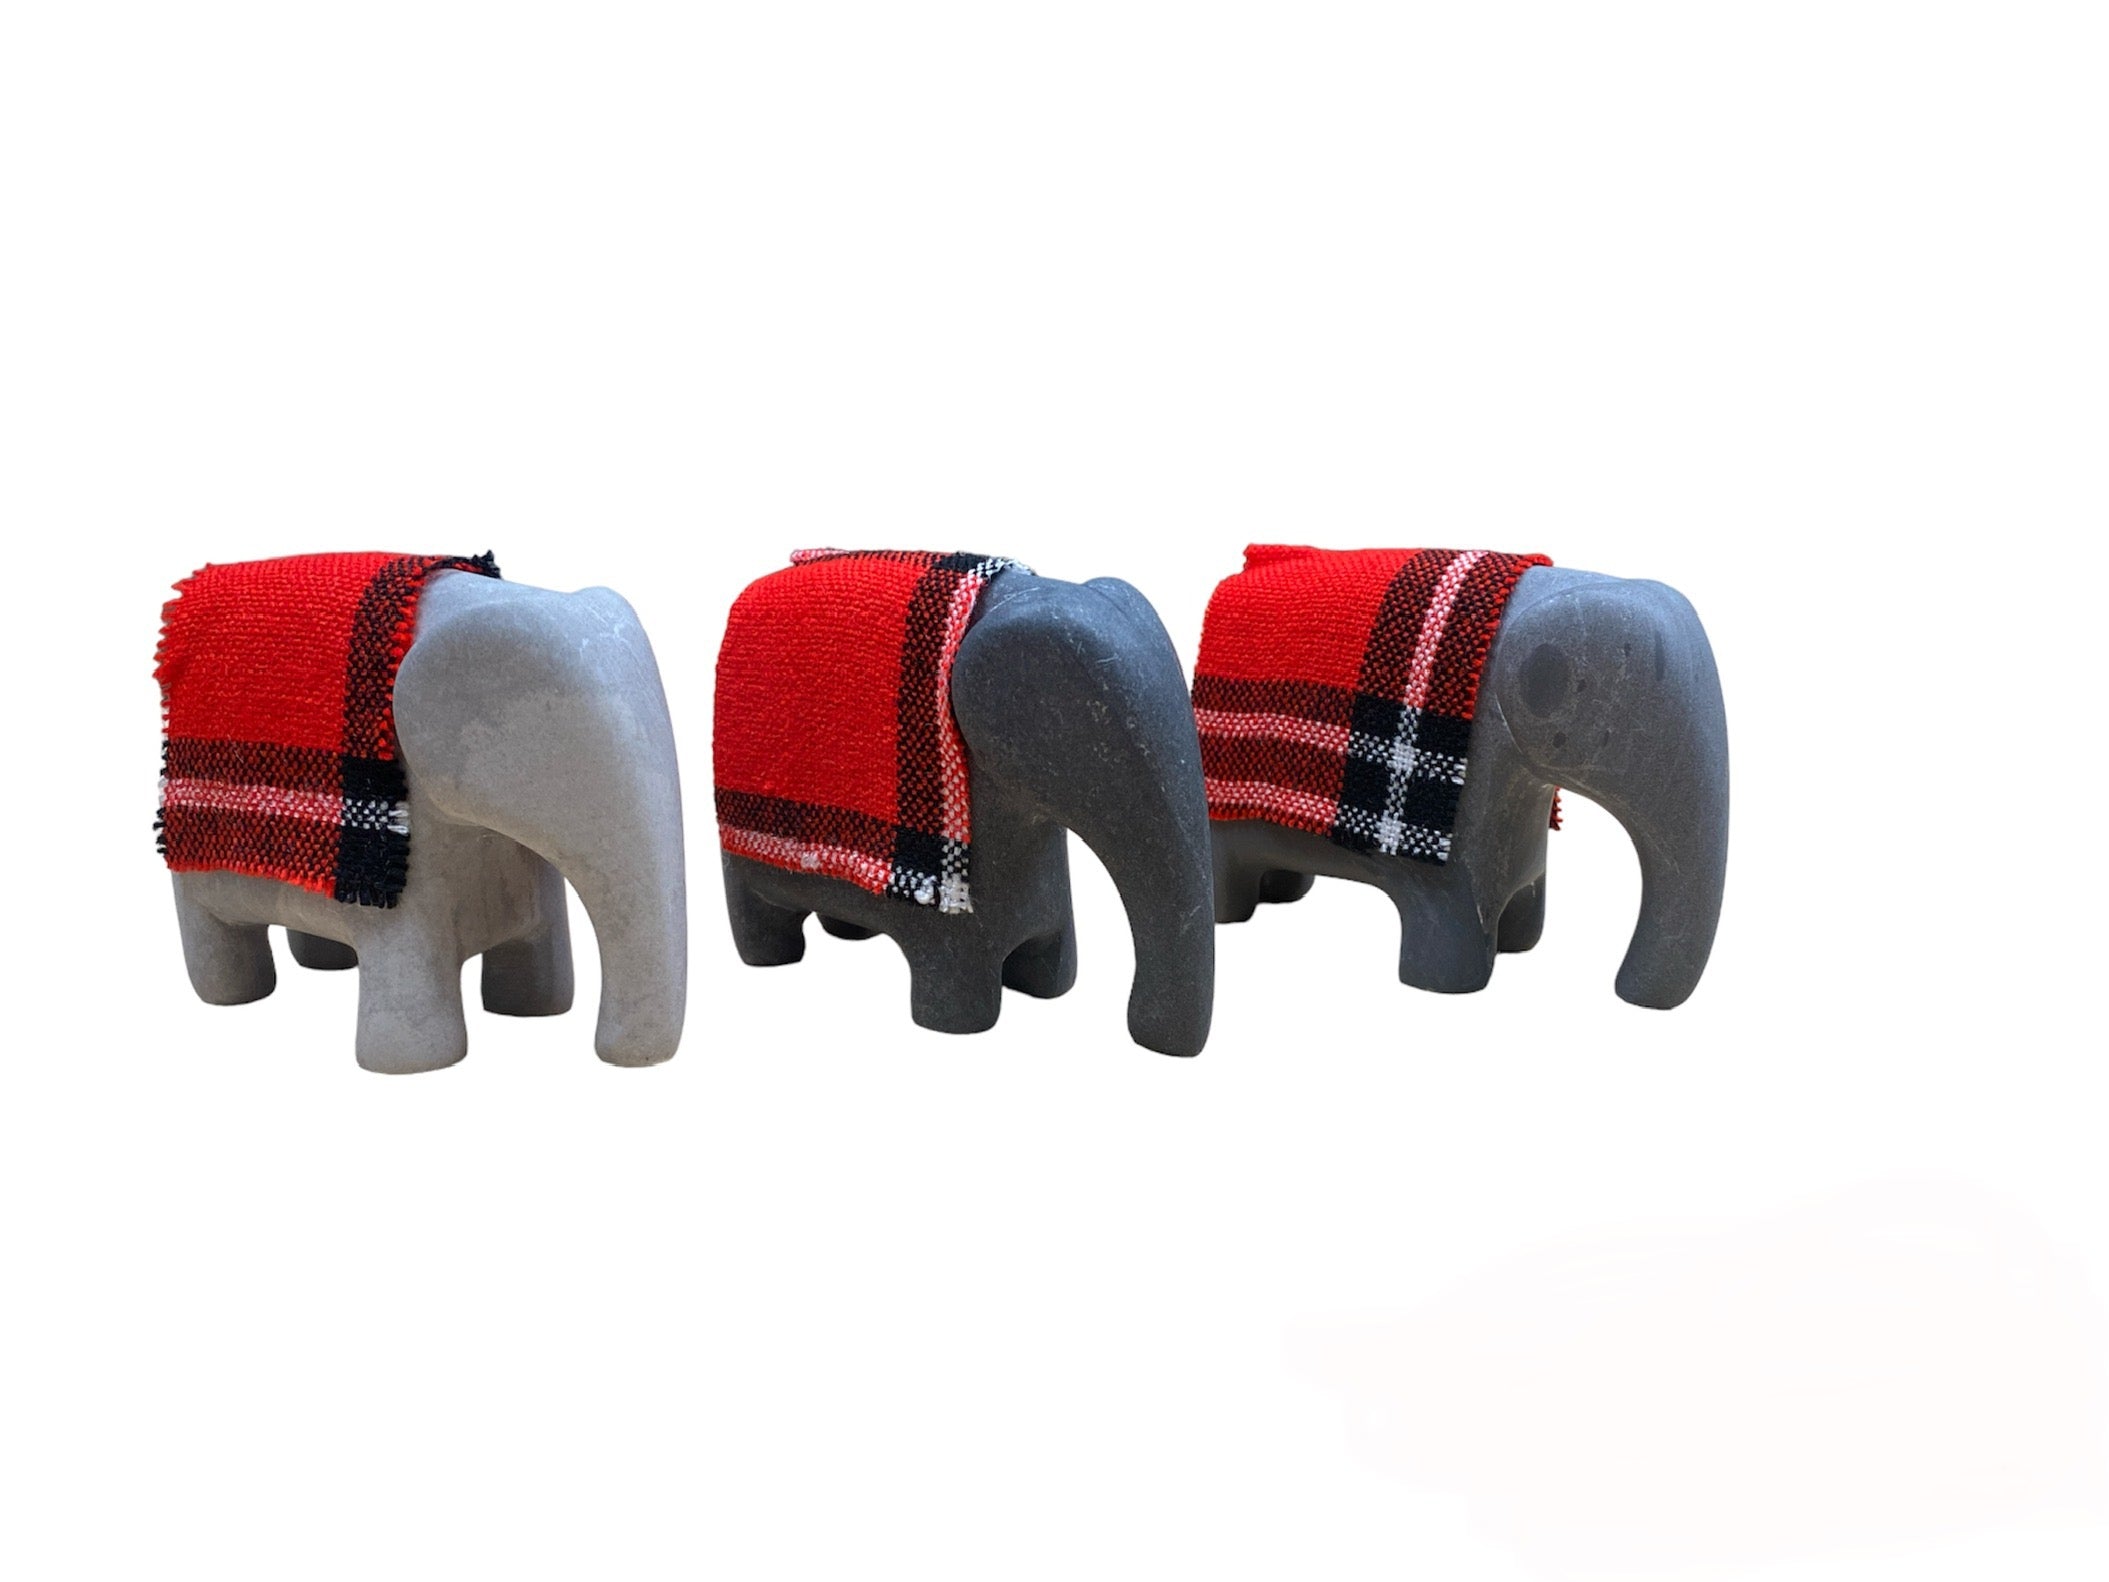 Soapstone Orphan Elephant Sculpture- Made in Kenya